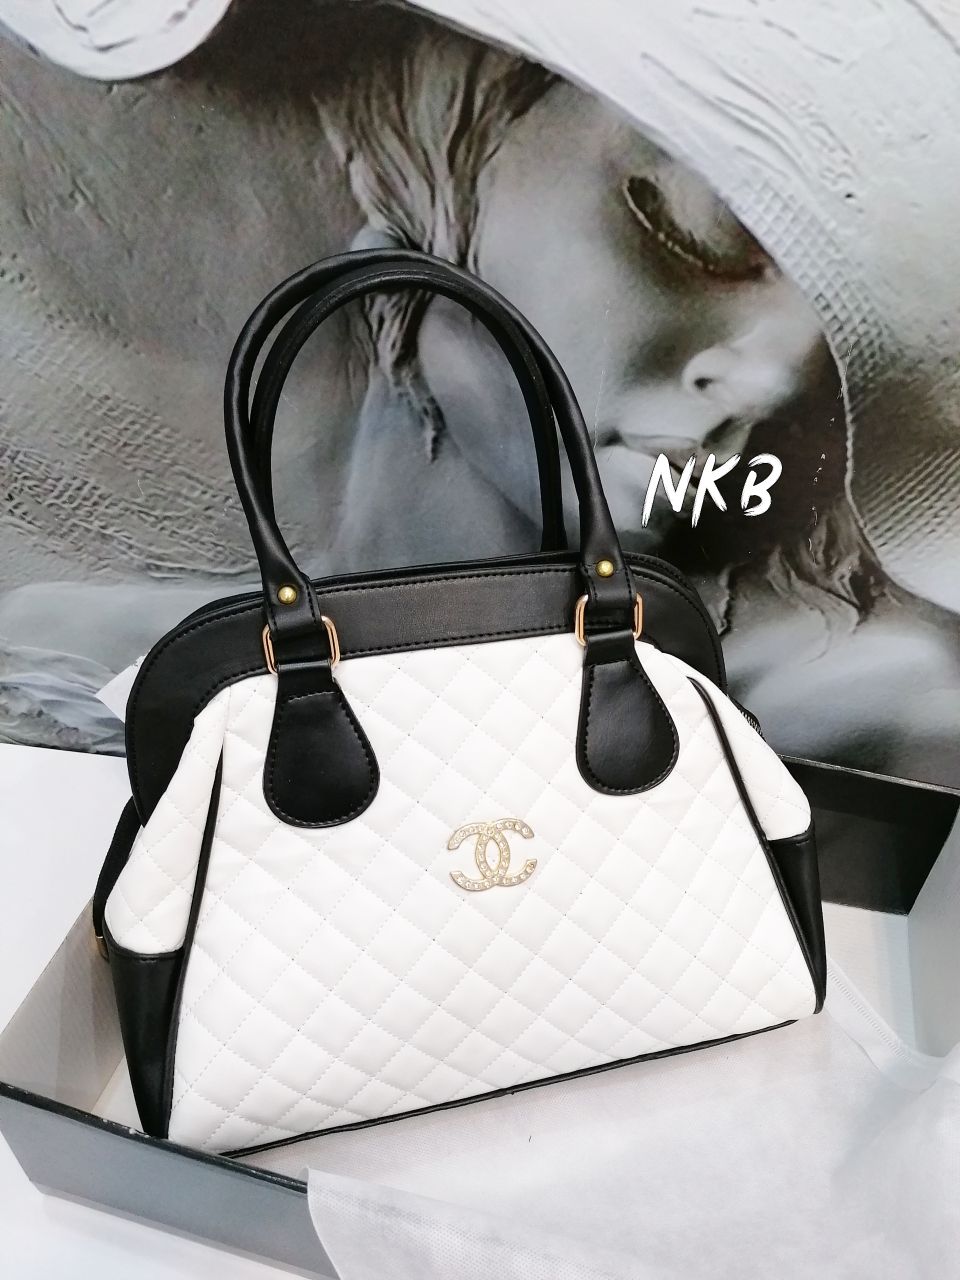 Chanel women handbag collection